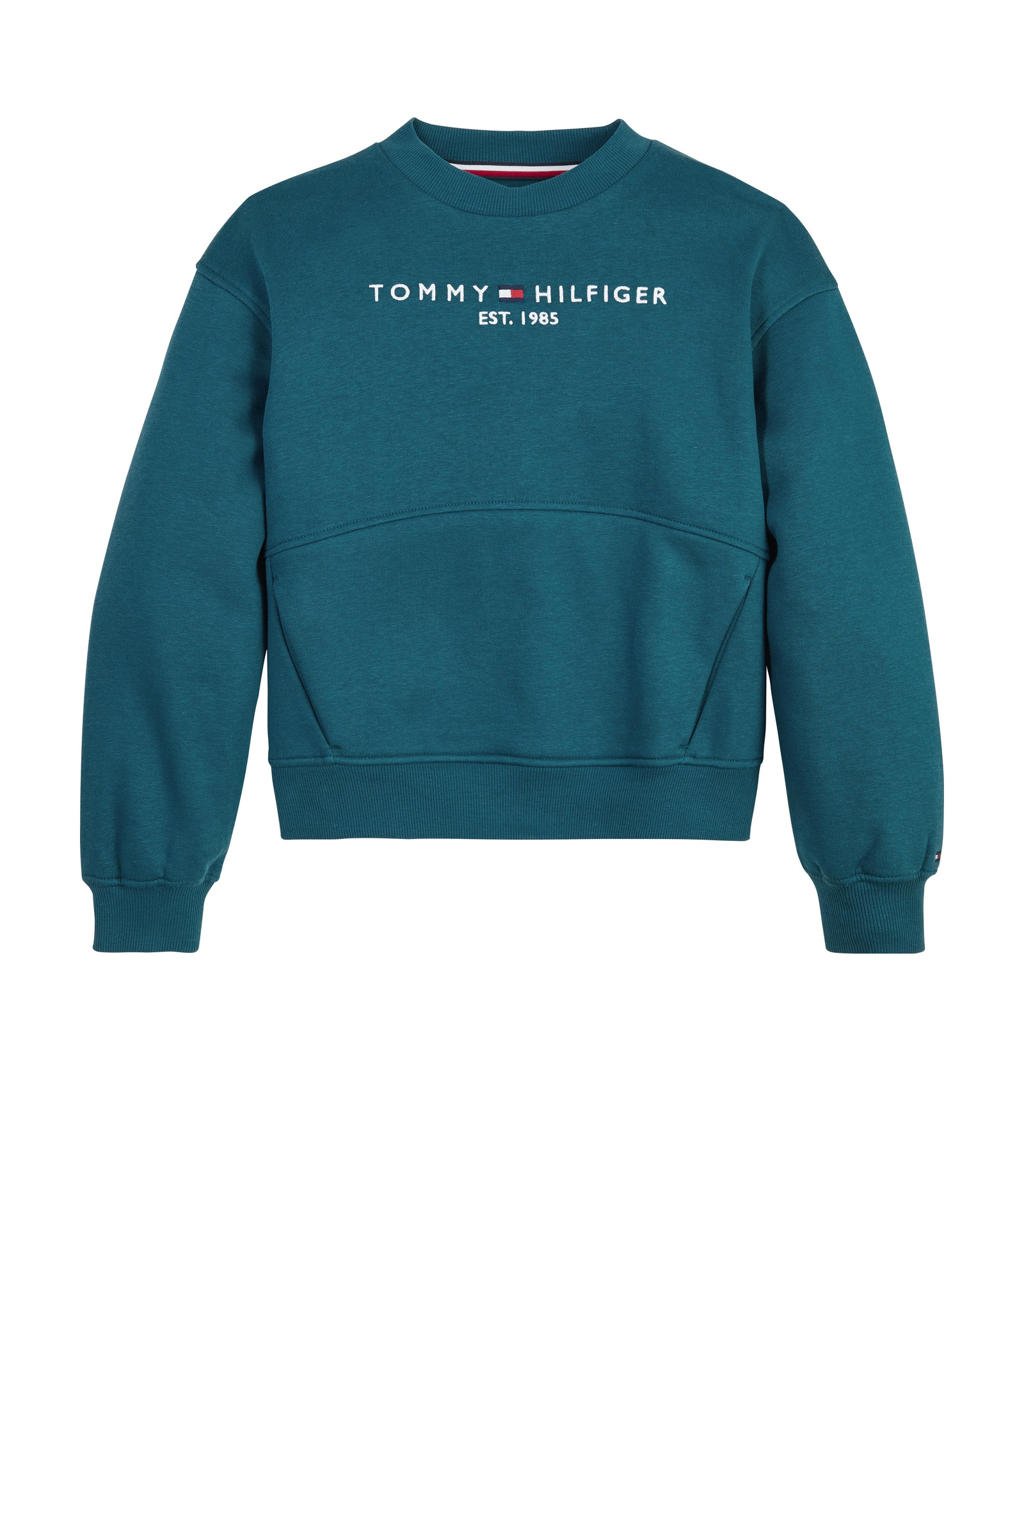 Blauwe meisjes Tommy Hilfiger sweater met logo dessin, lange mouwen en ronde hals